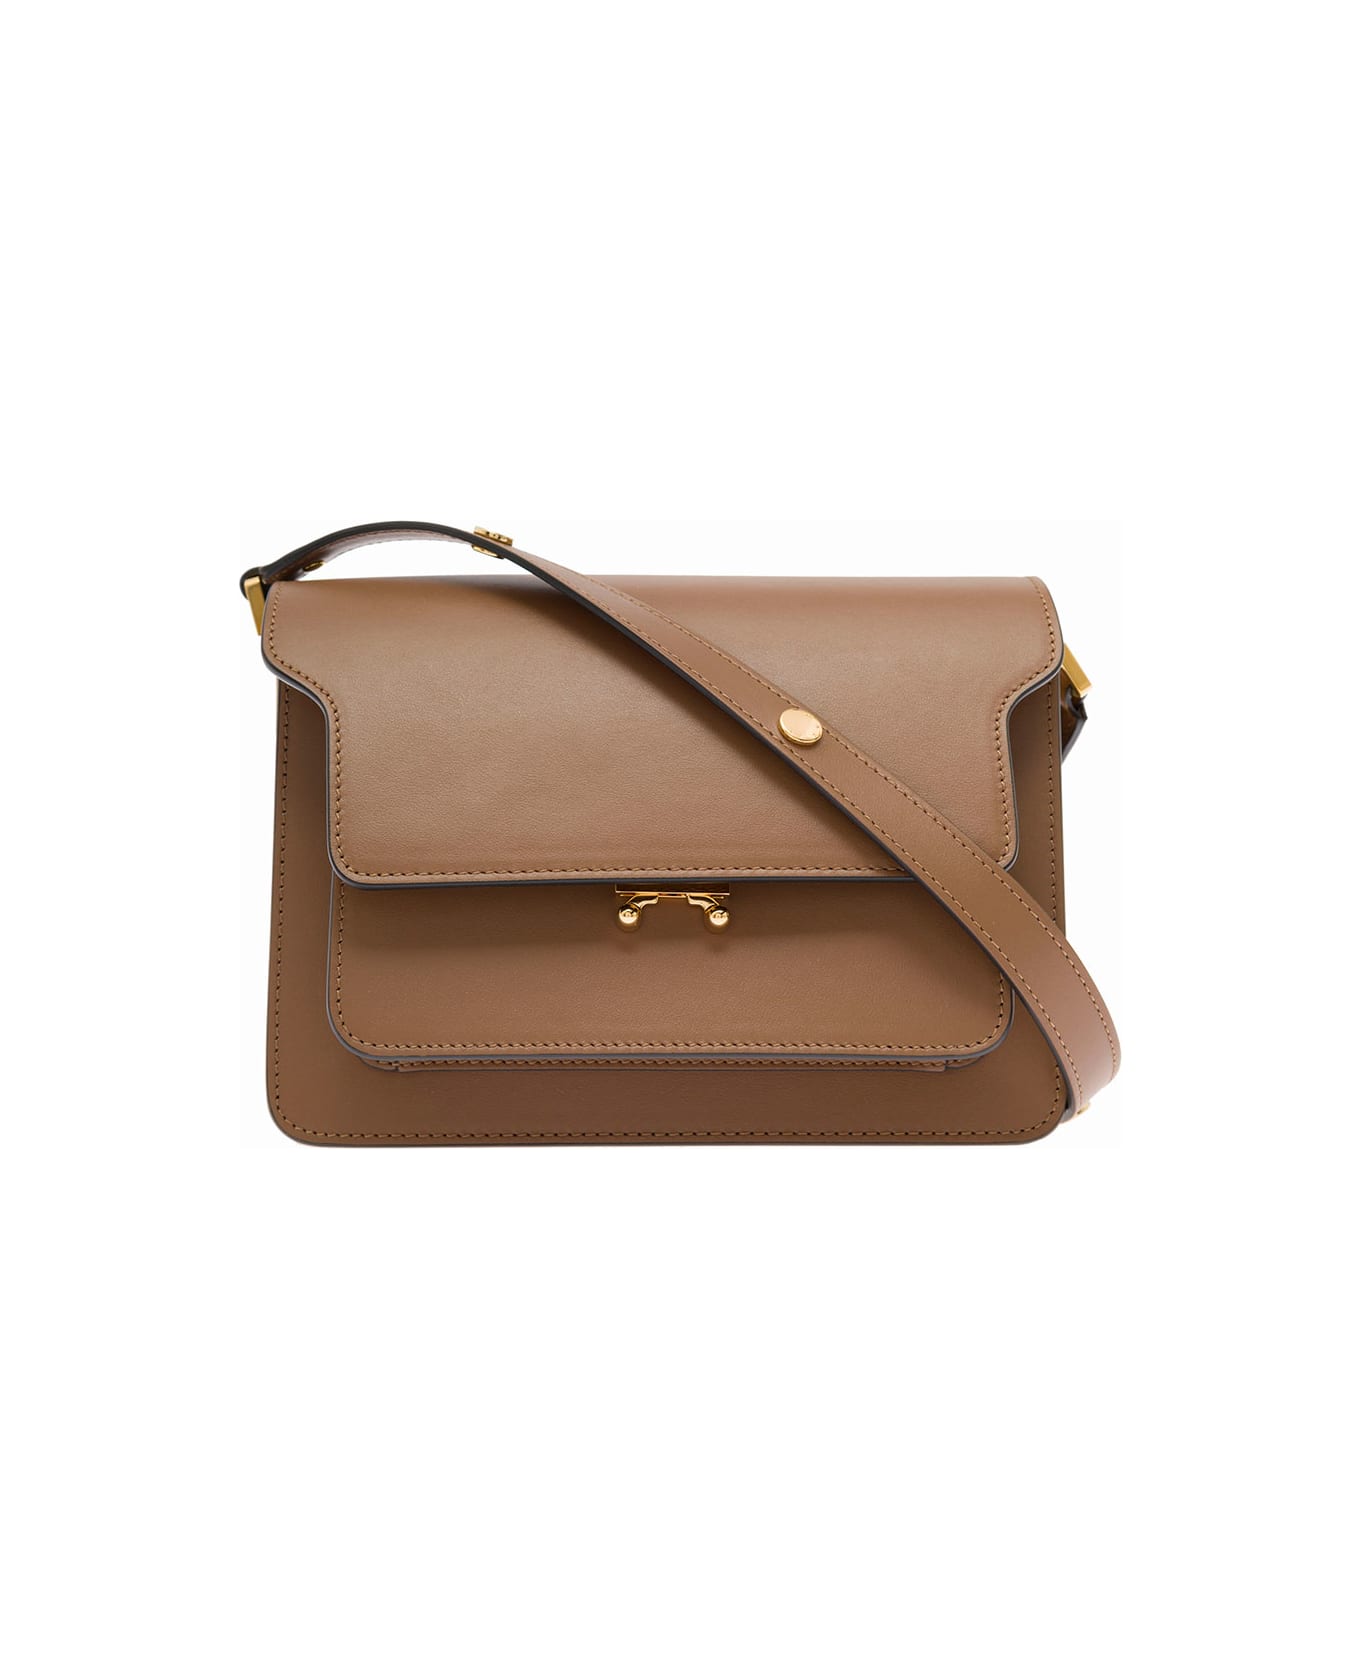 Marni Woman's Brown Leather Crossbody Bag - Brown ショルダーバッグ